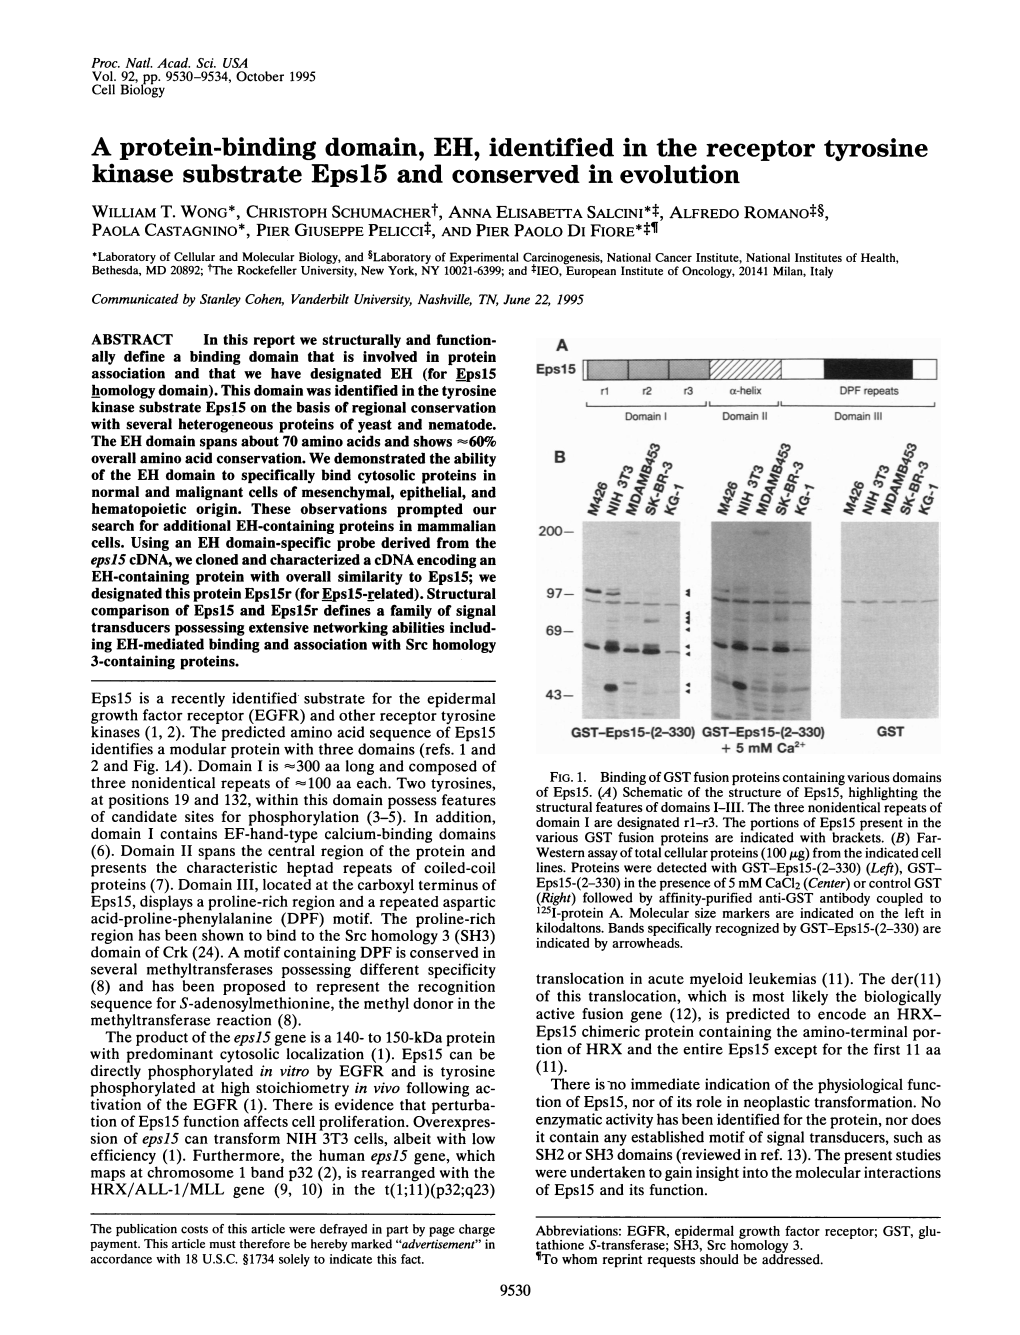 A Protein-Binding Domain, EH, Identified Inthe Receptor Tyrosine